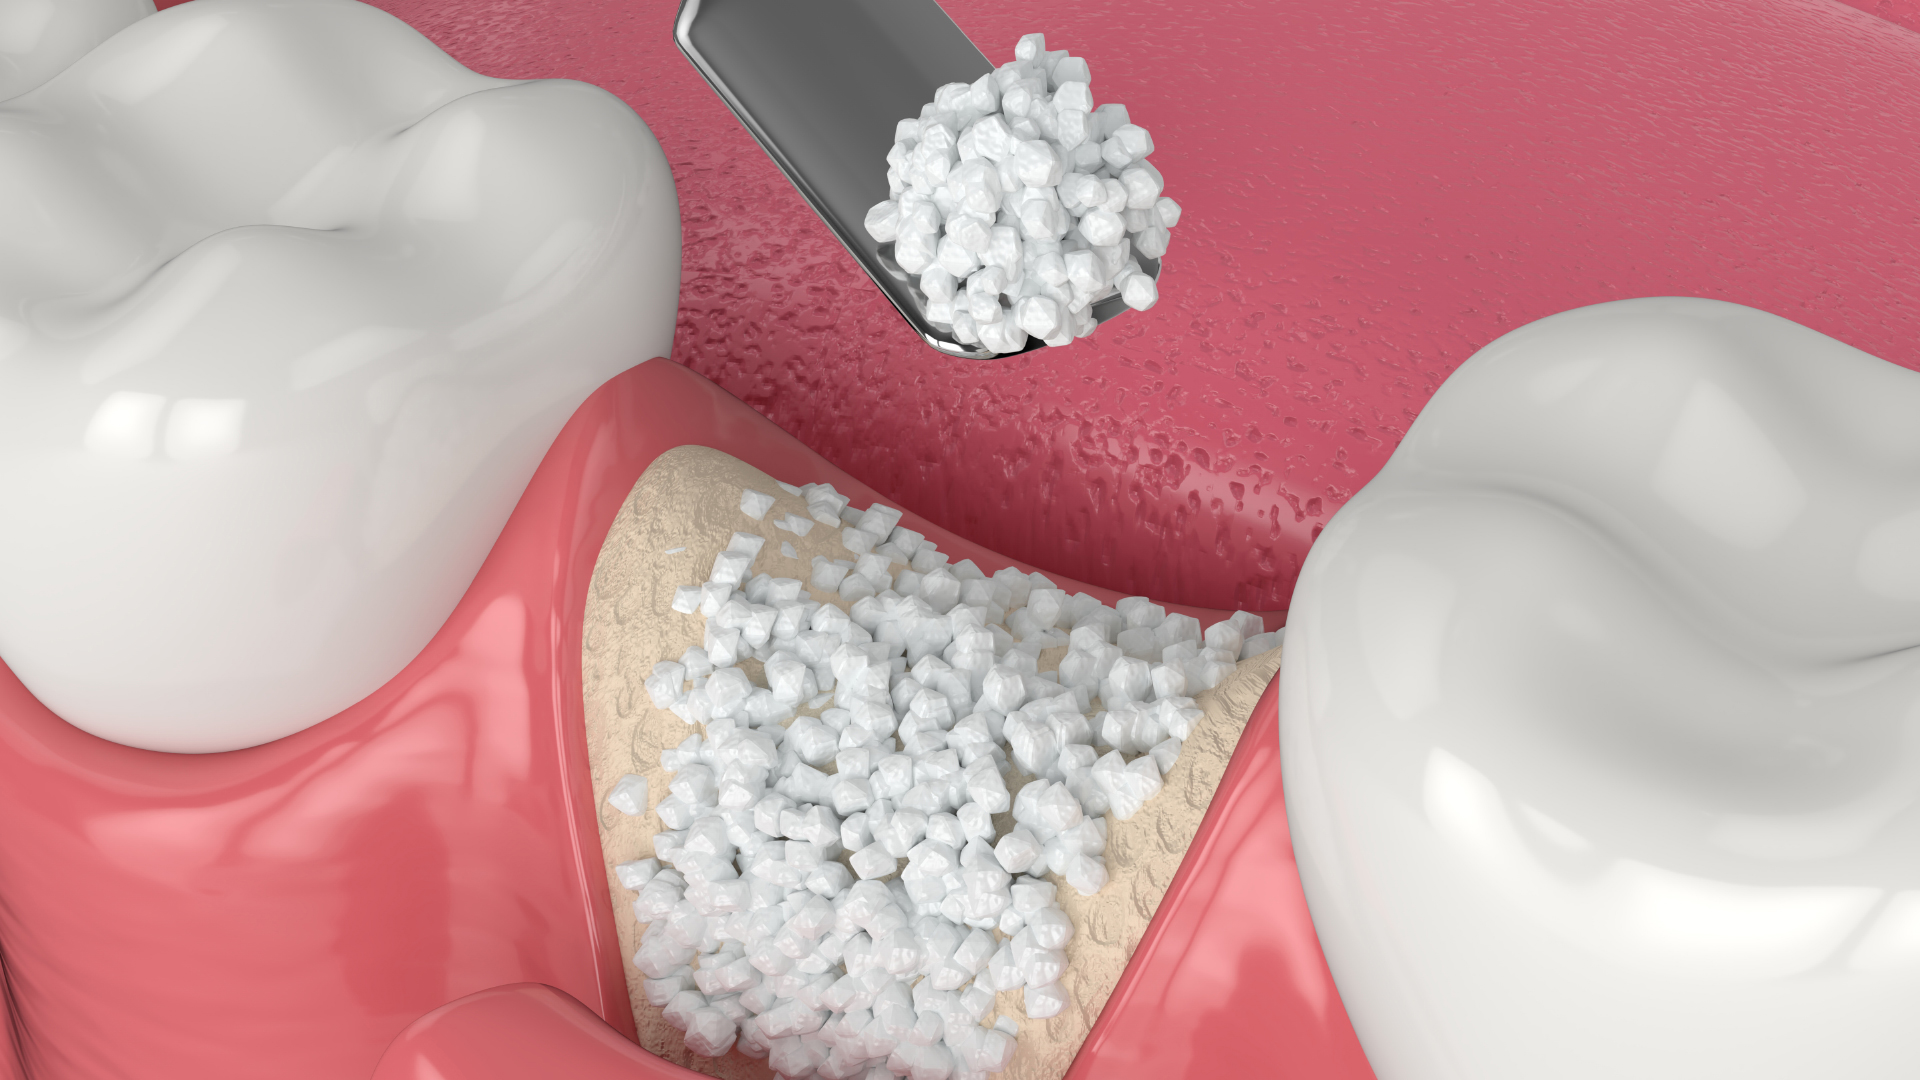 dental implant bone graft success rate